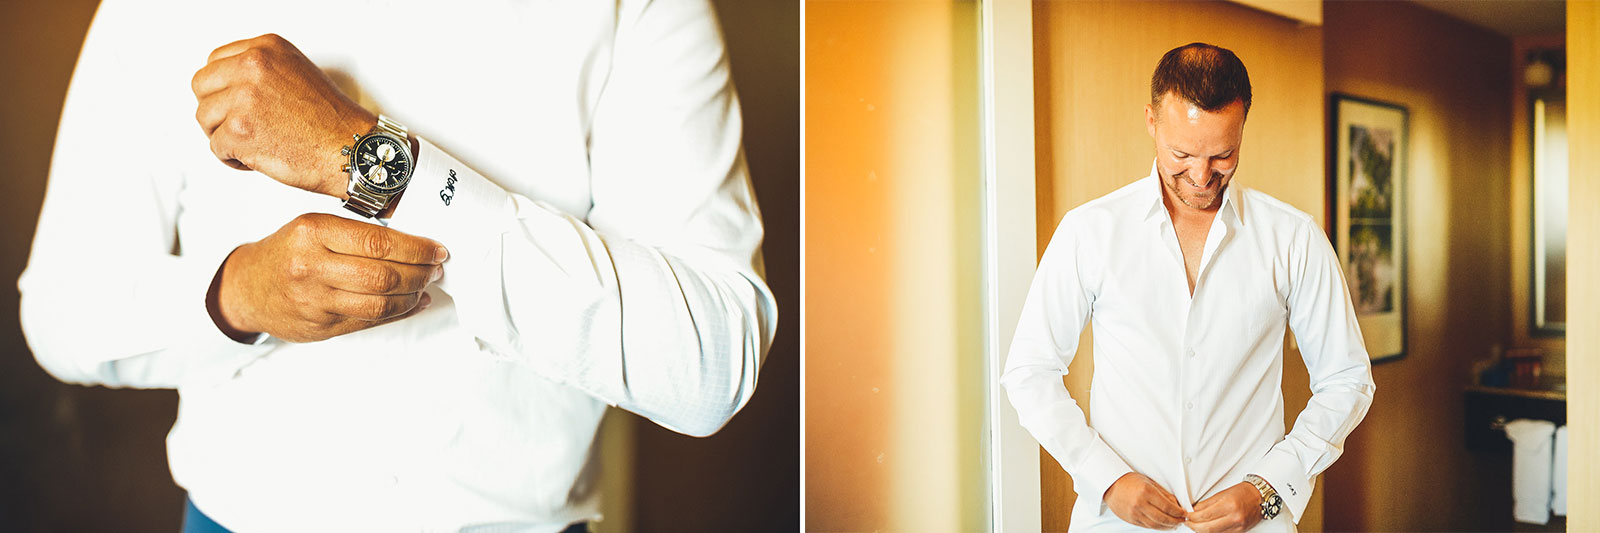 09 groom puttin gon shirt - Natalie + Alan // Chicago Wedding Photographer at Cafe Brauer